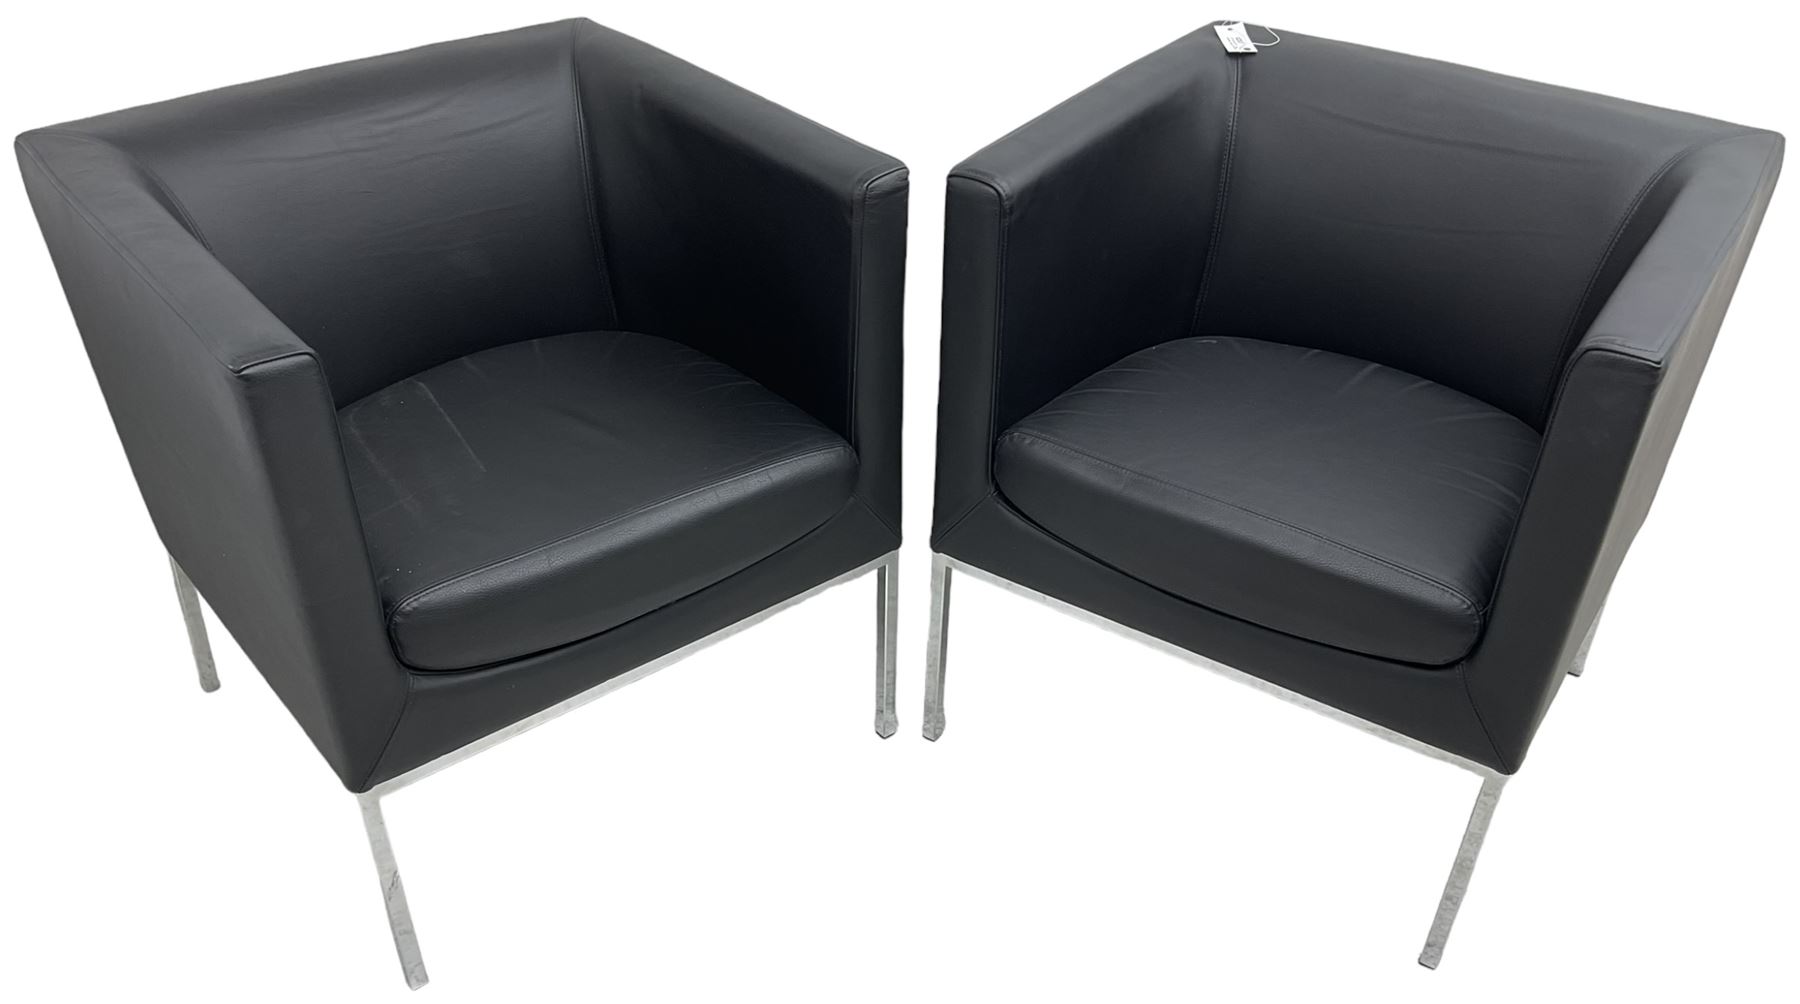 Orangebox - pair of contemporary 'Drift' tub armchairs - Image 5 of 7